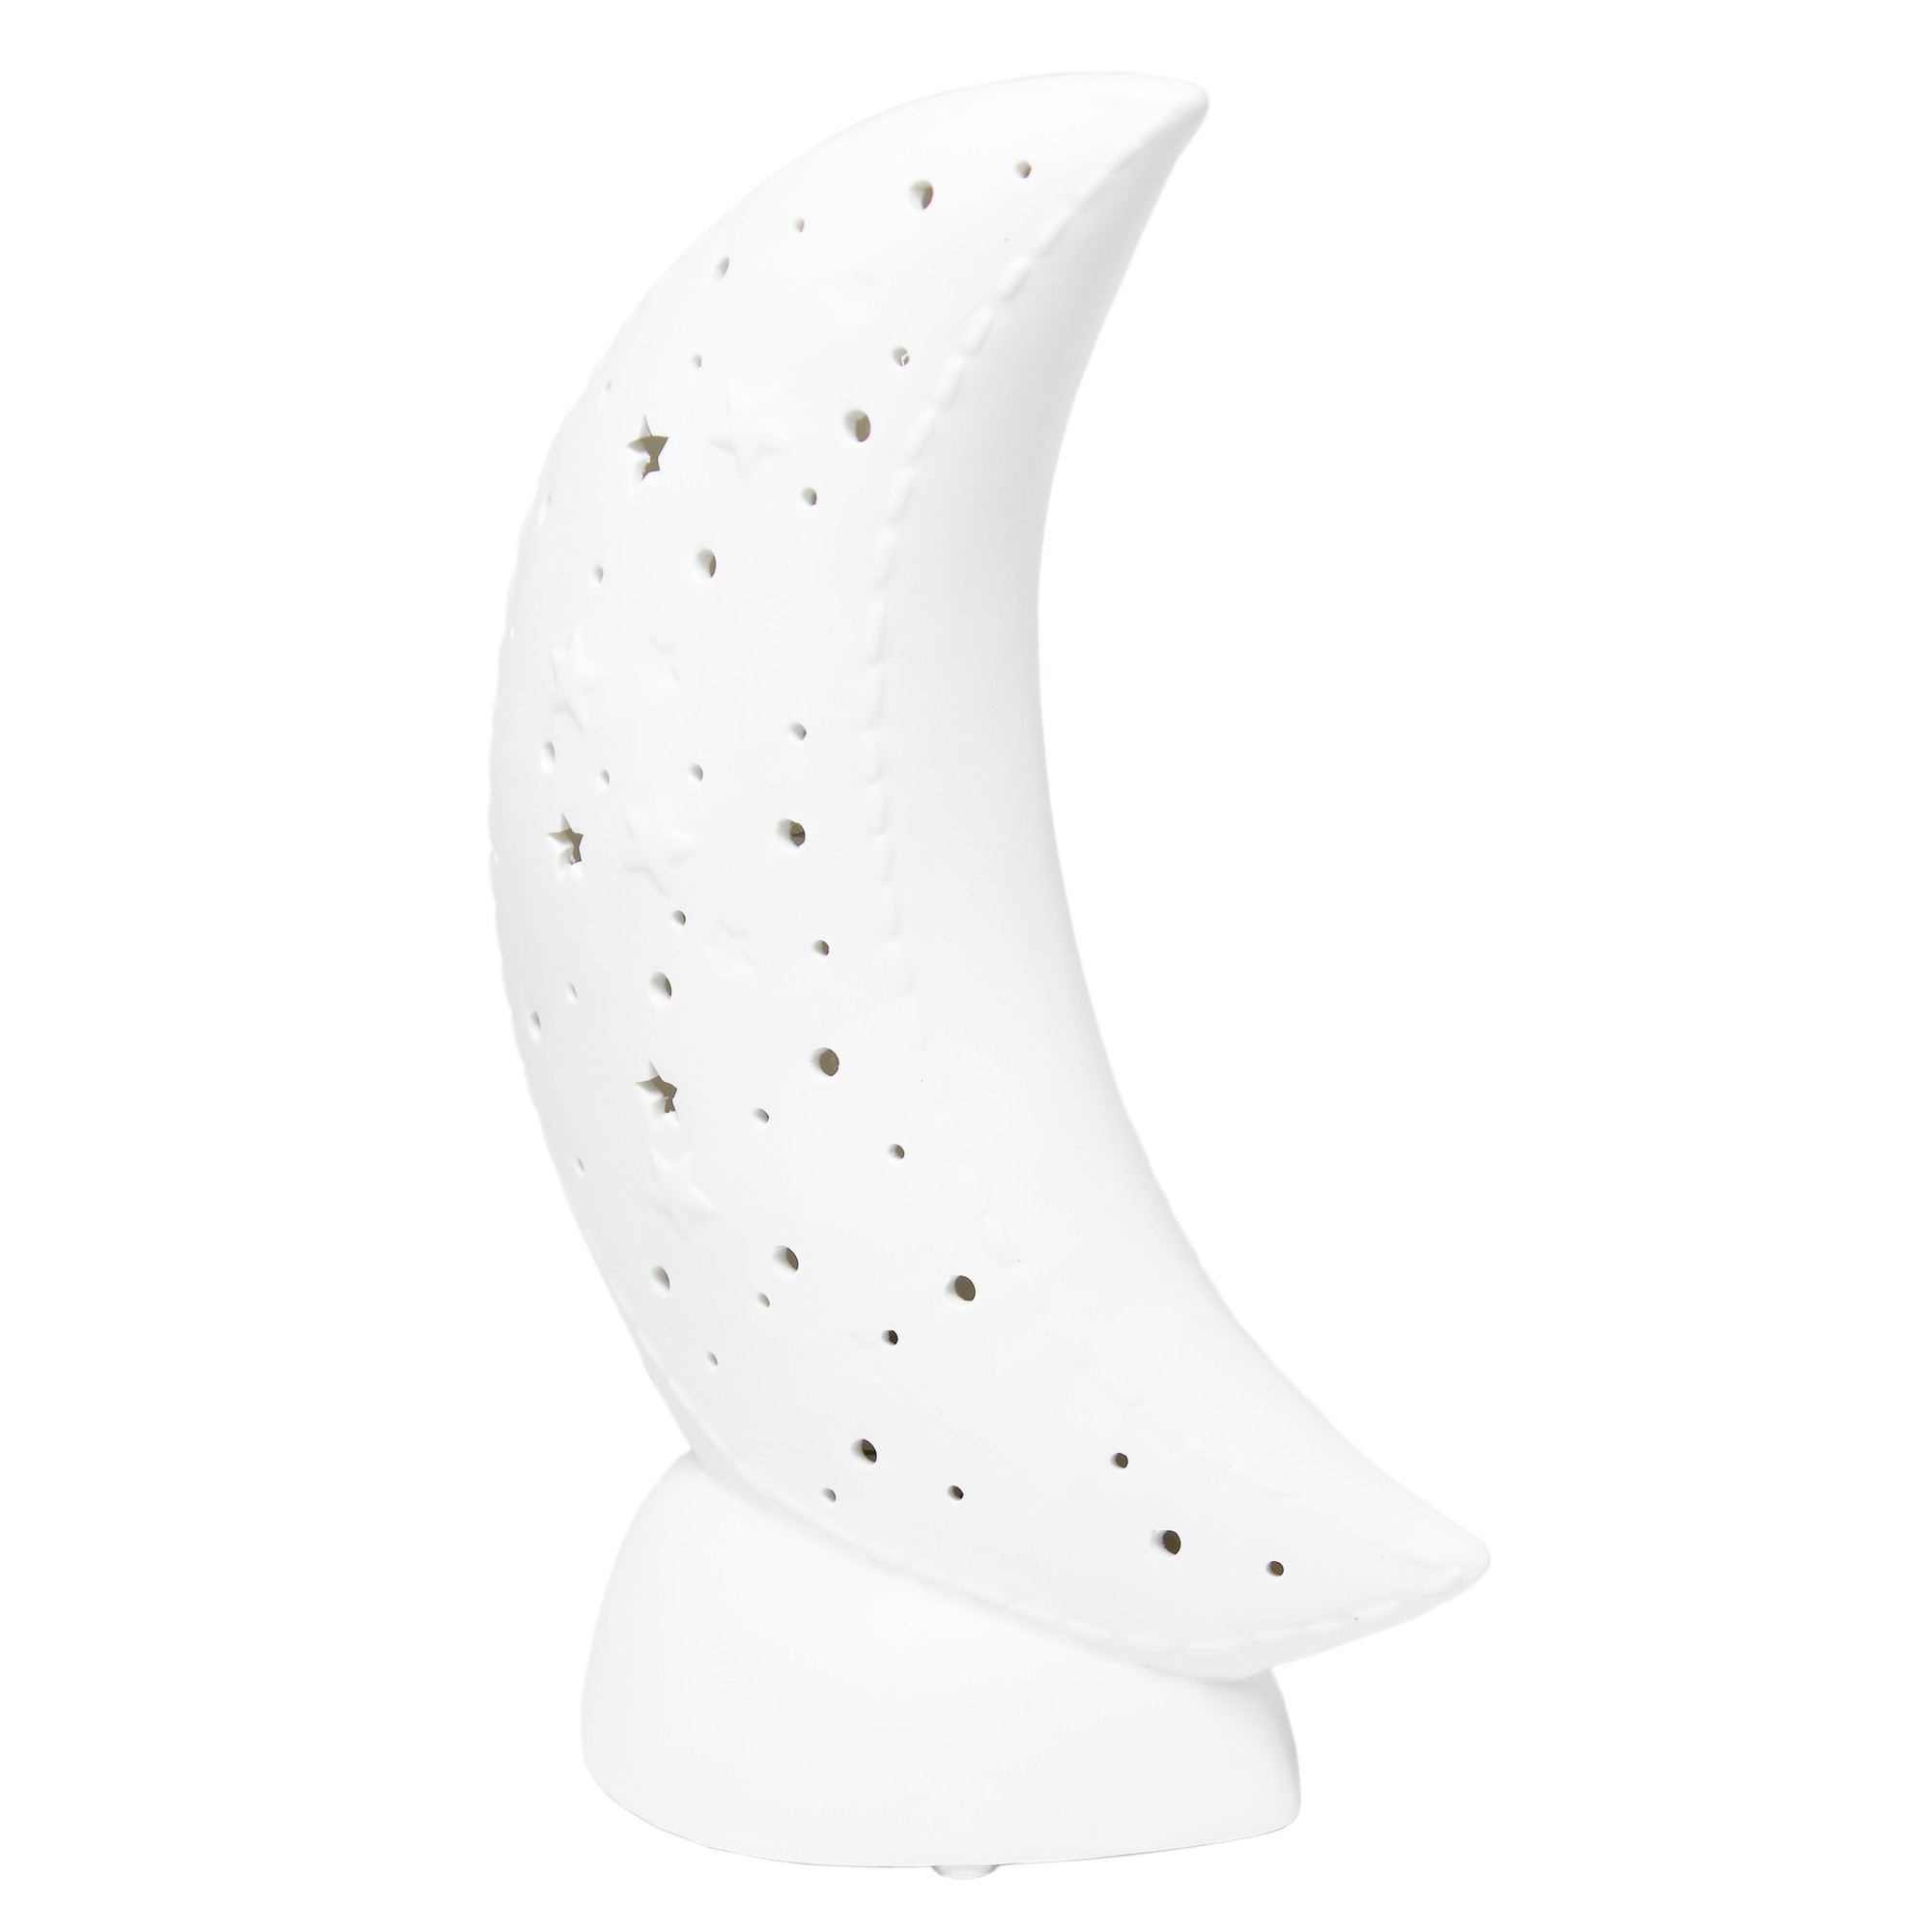 Simple Designs Porcelain Moon Shaped Table Lamp